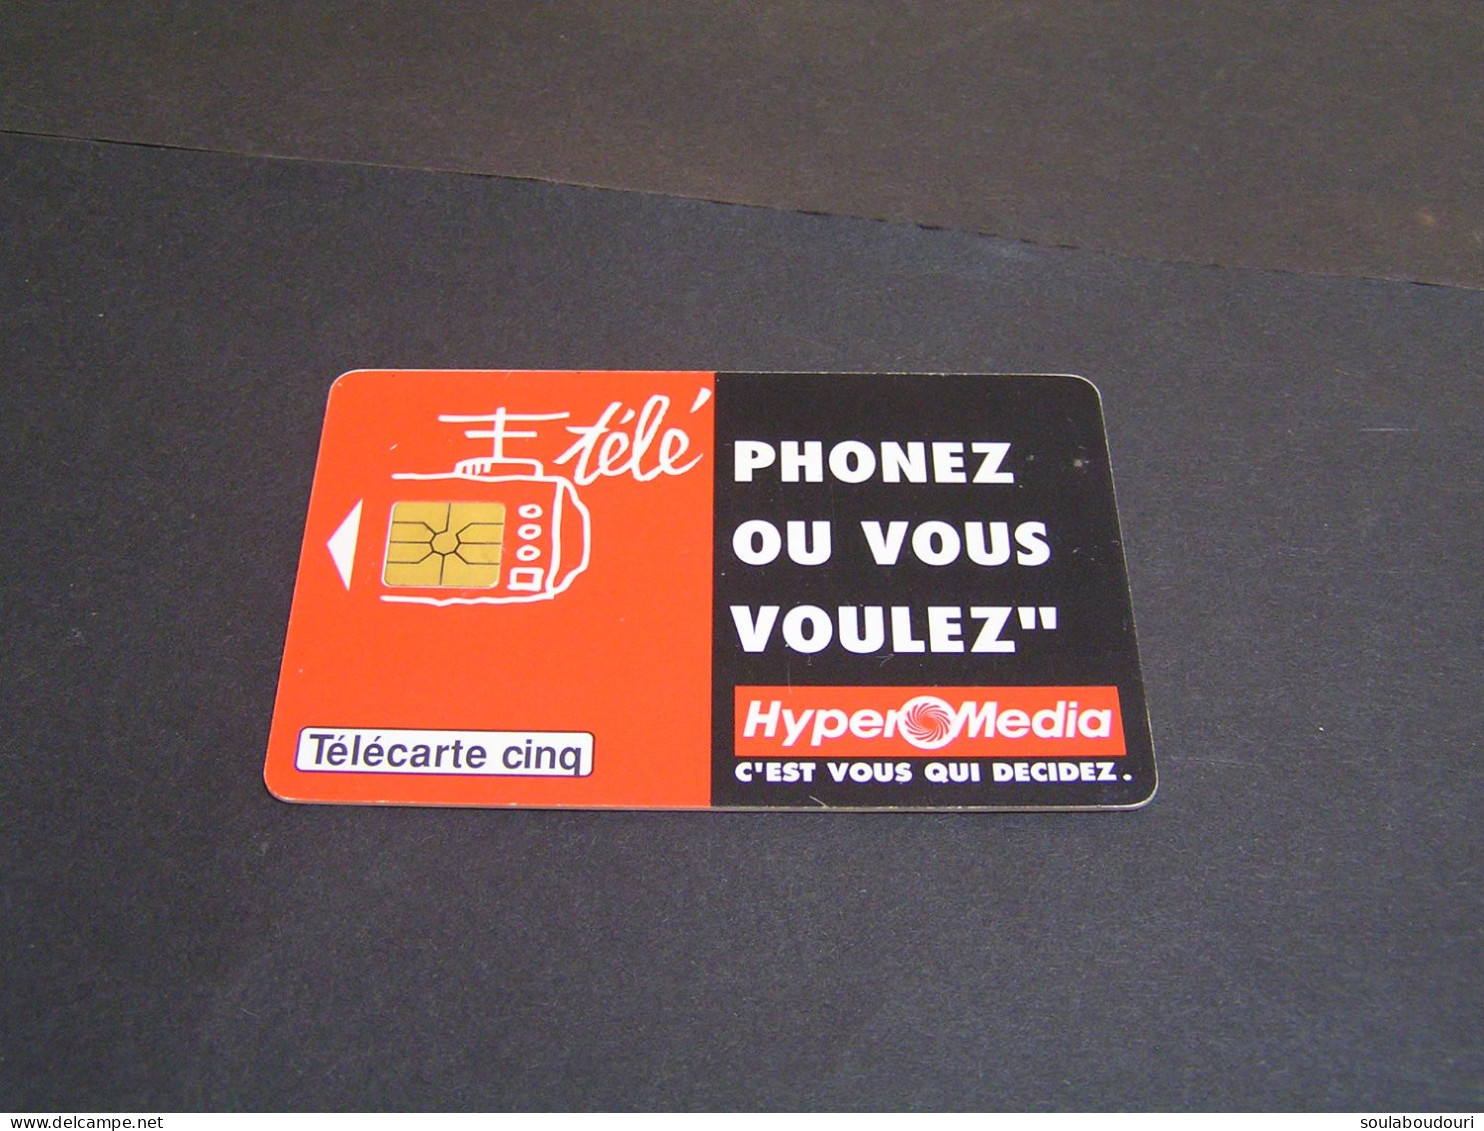 FRANCE Phonecards Private Tirage .16.000 Ex 04/94... - 5 Unités